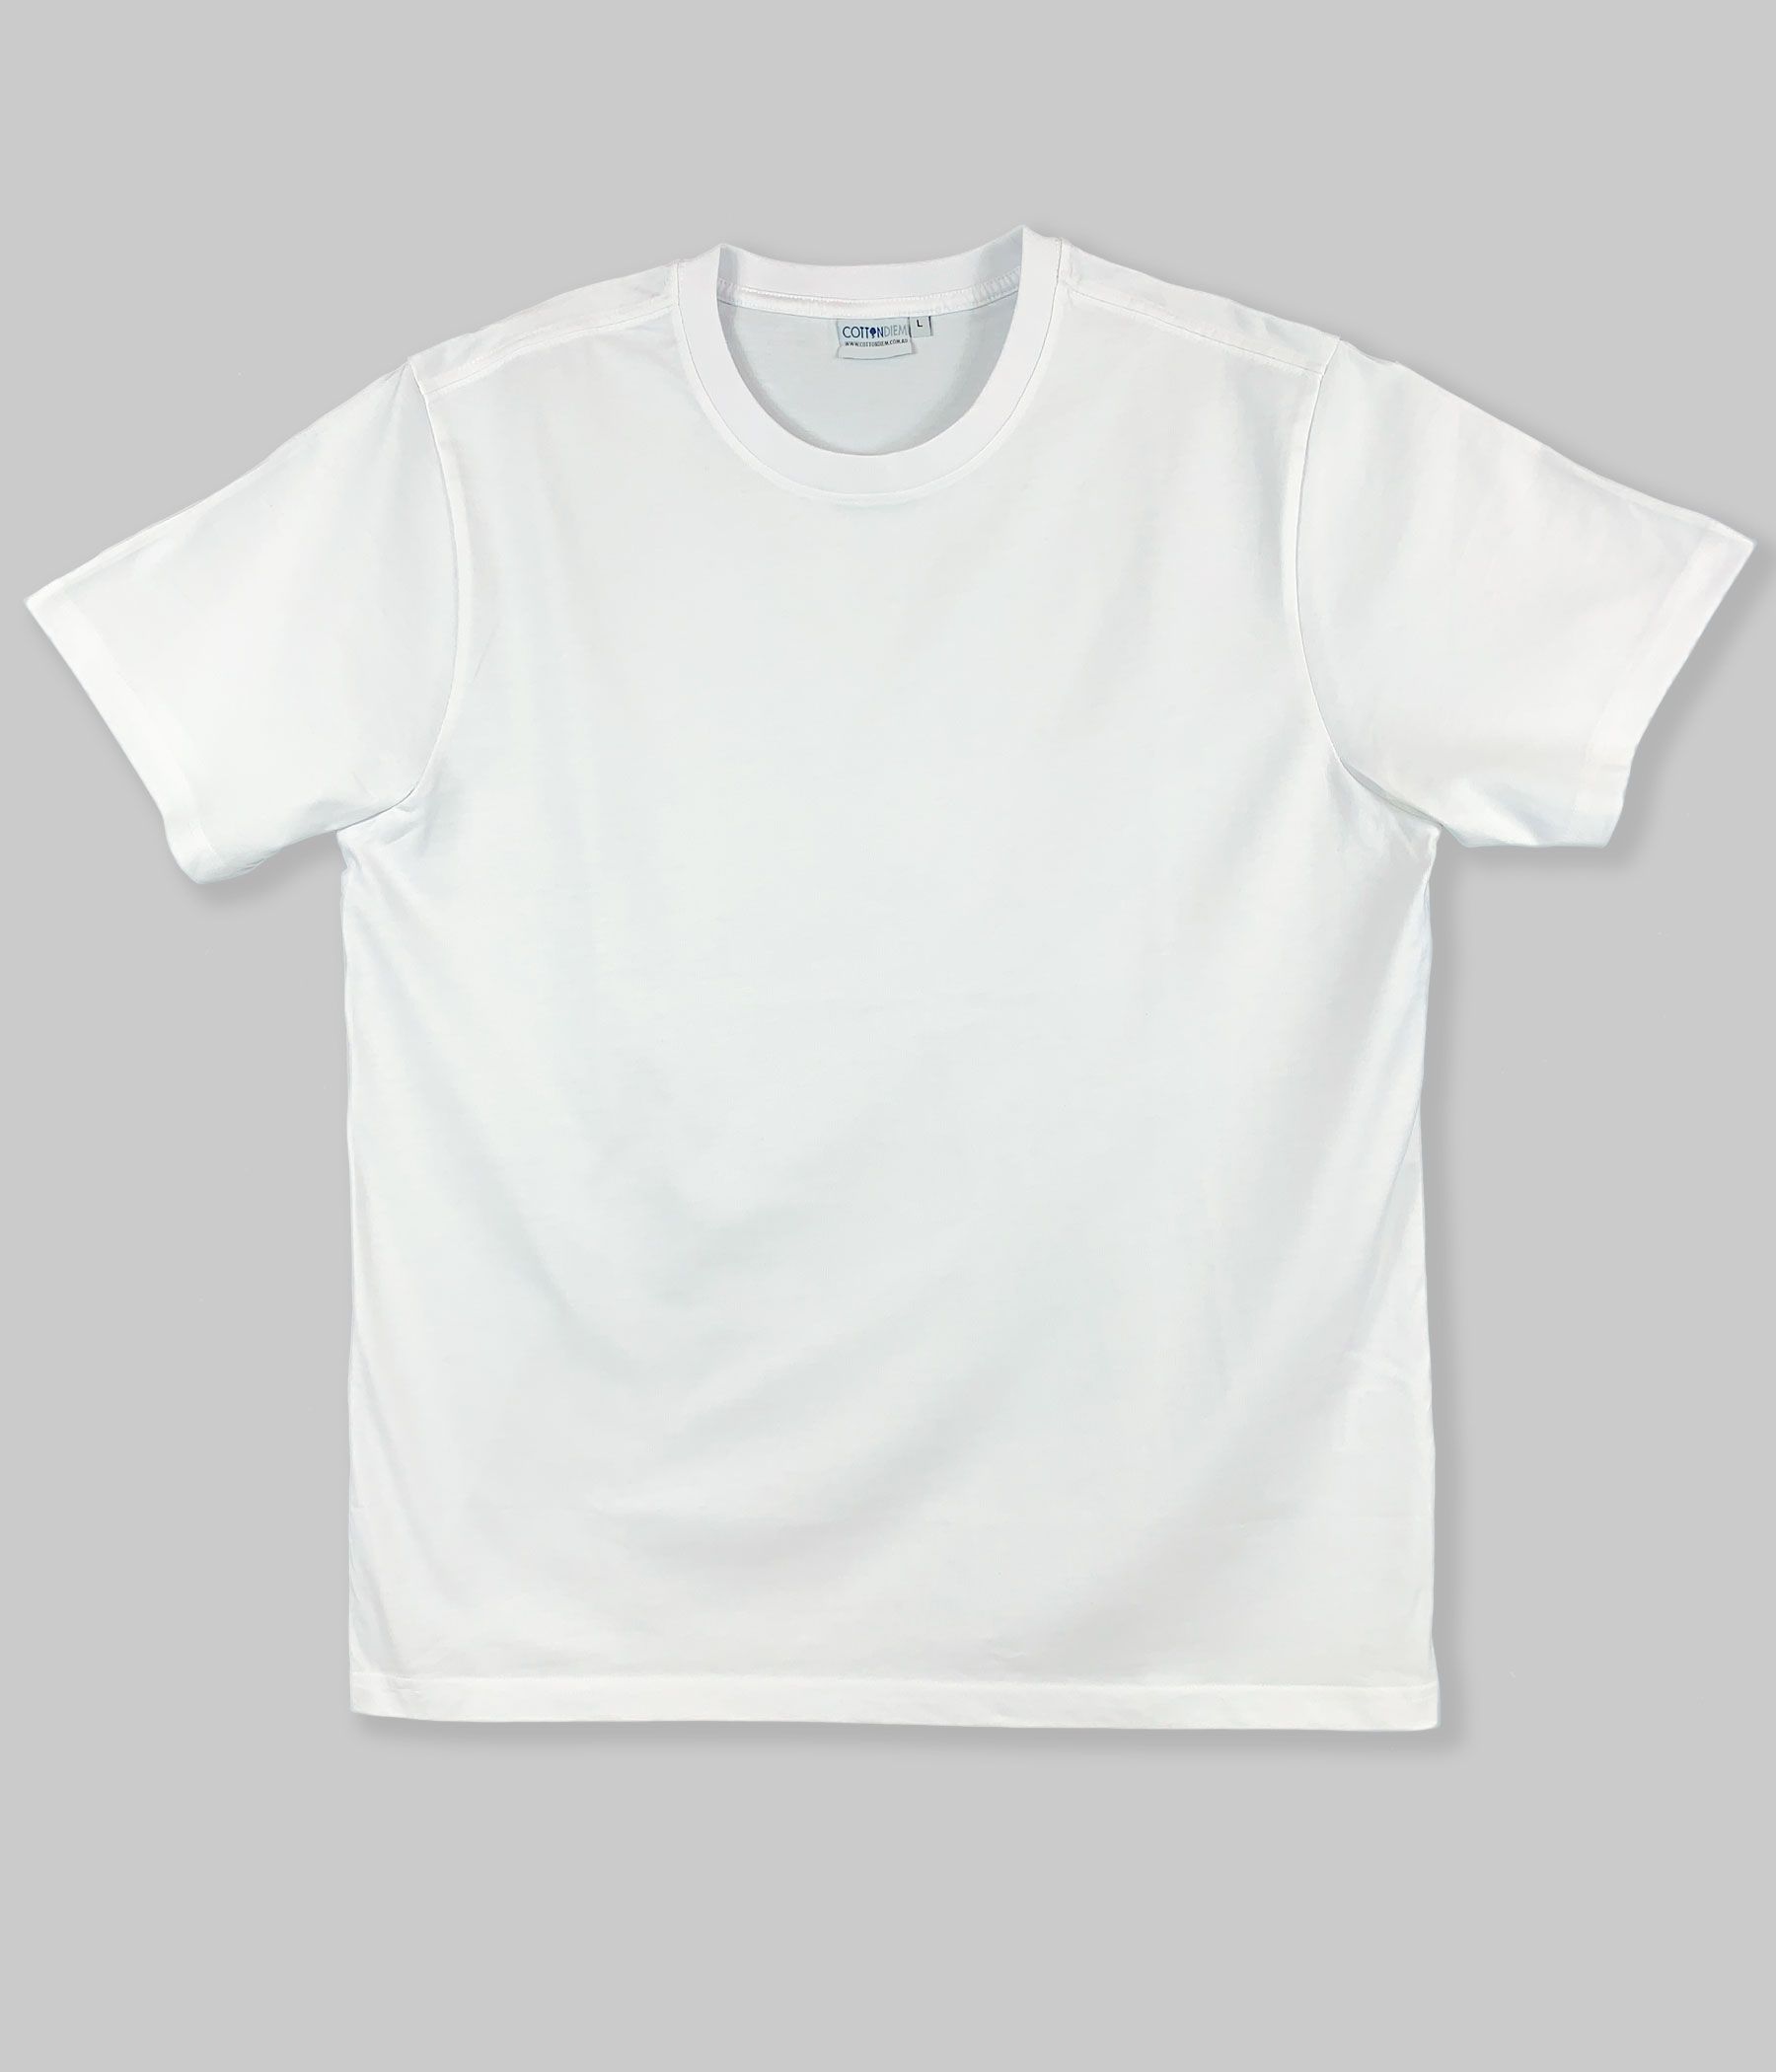 Plain White Shirt Images | stickhealthcare.co.uk